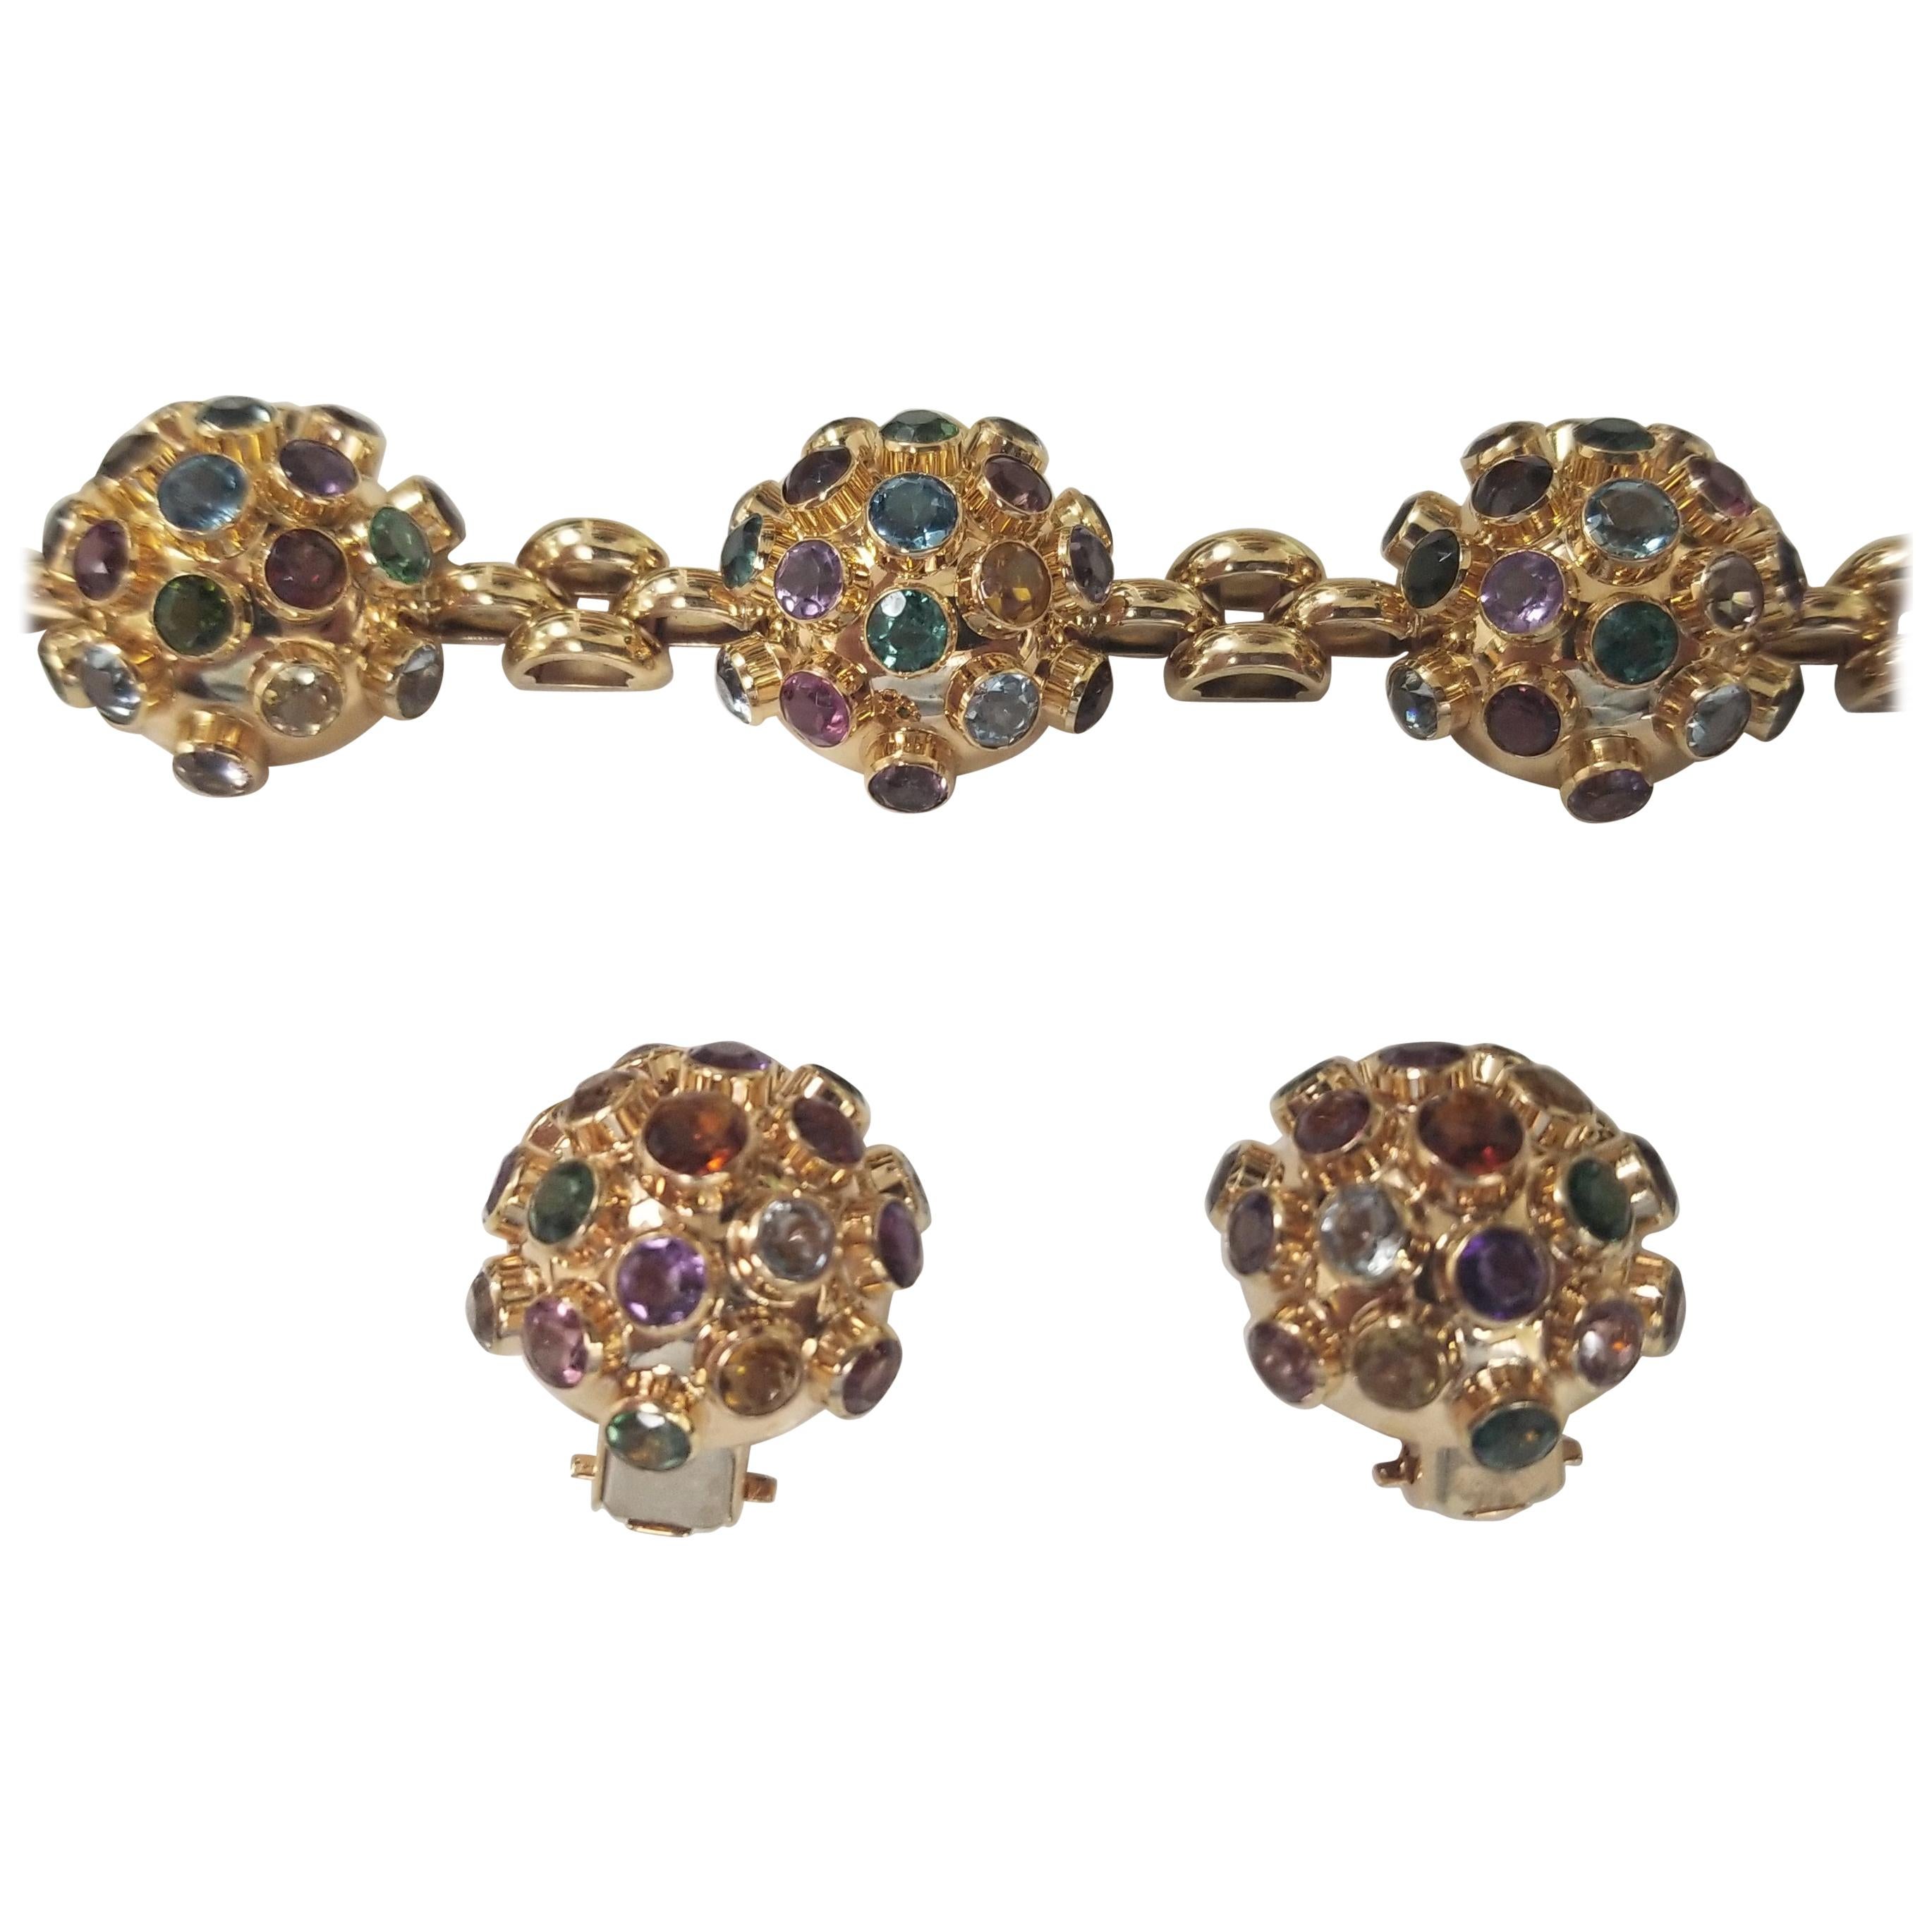 Sputnik Style Ring in 18 Karat Gold Semi Precious Stone Bracelet and Earrings